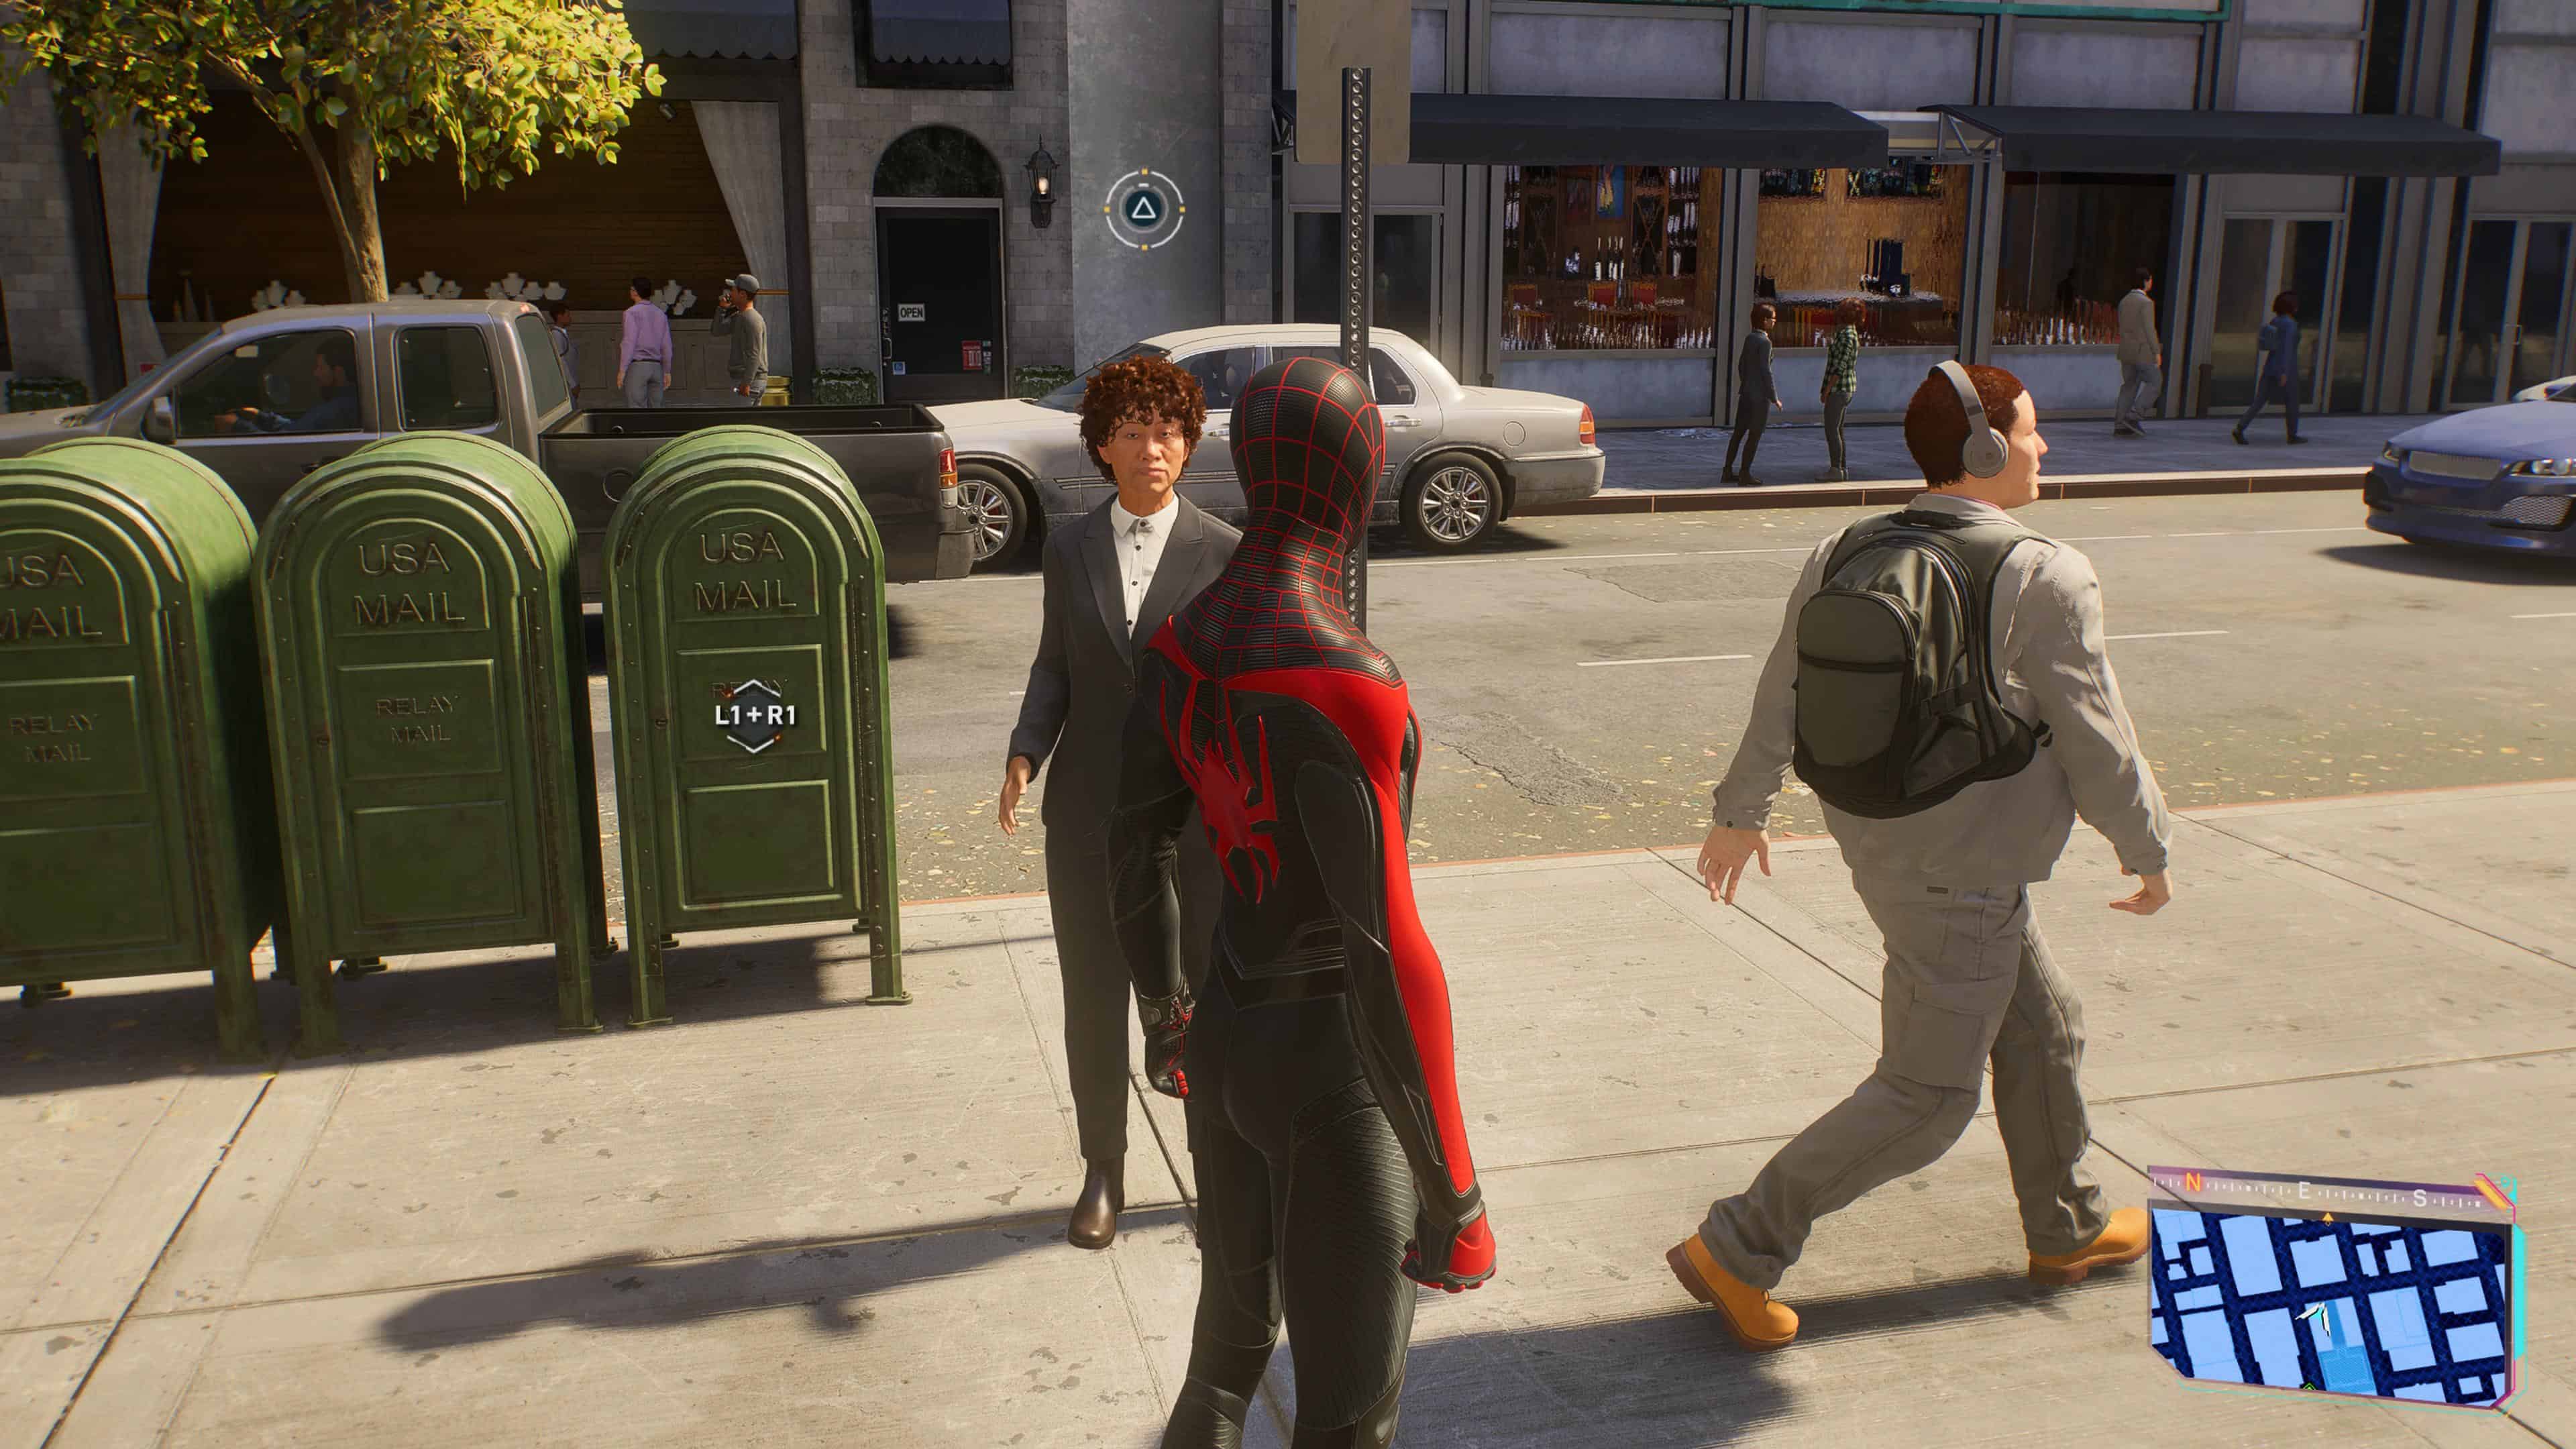 Spider-Man 2 screenshot shows miles greeting a citizen